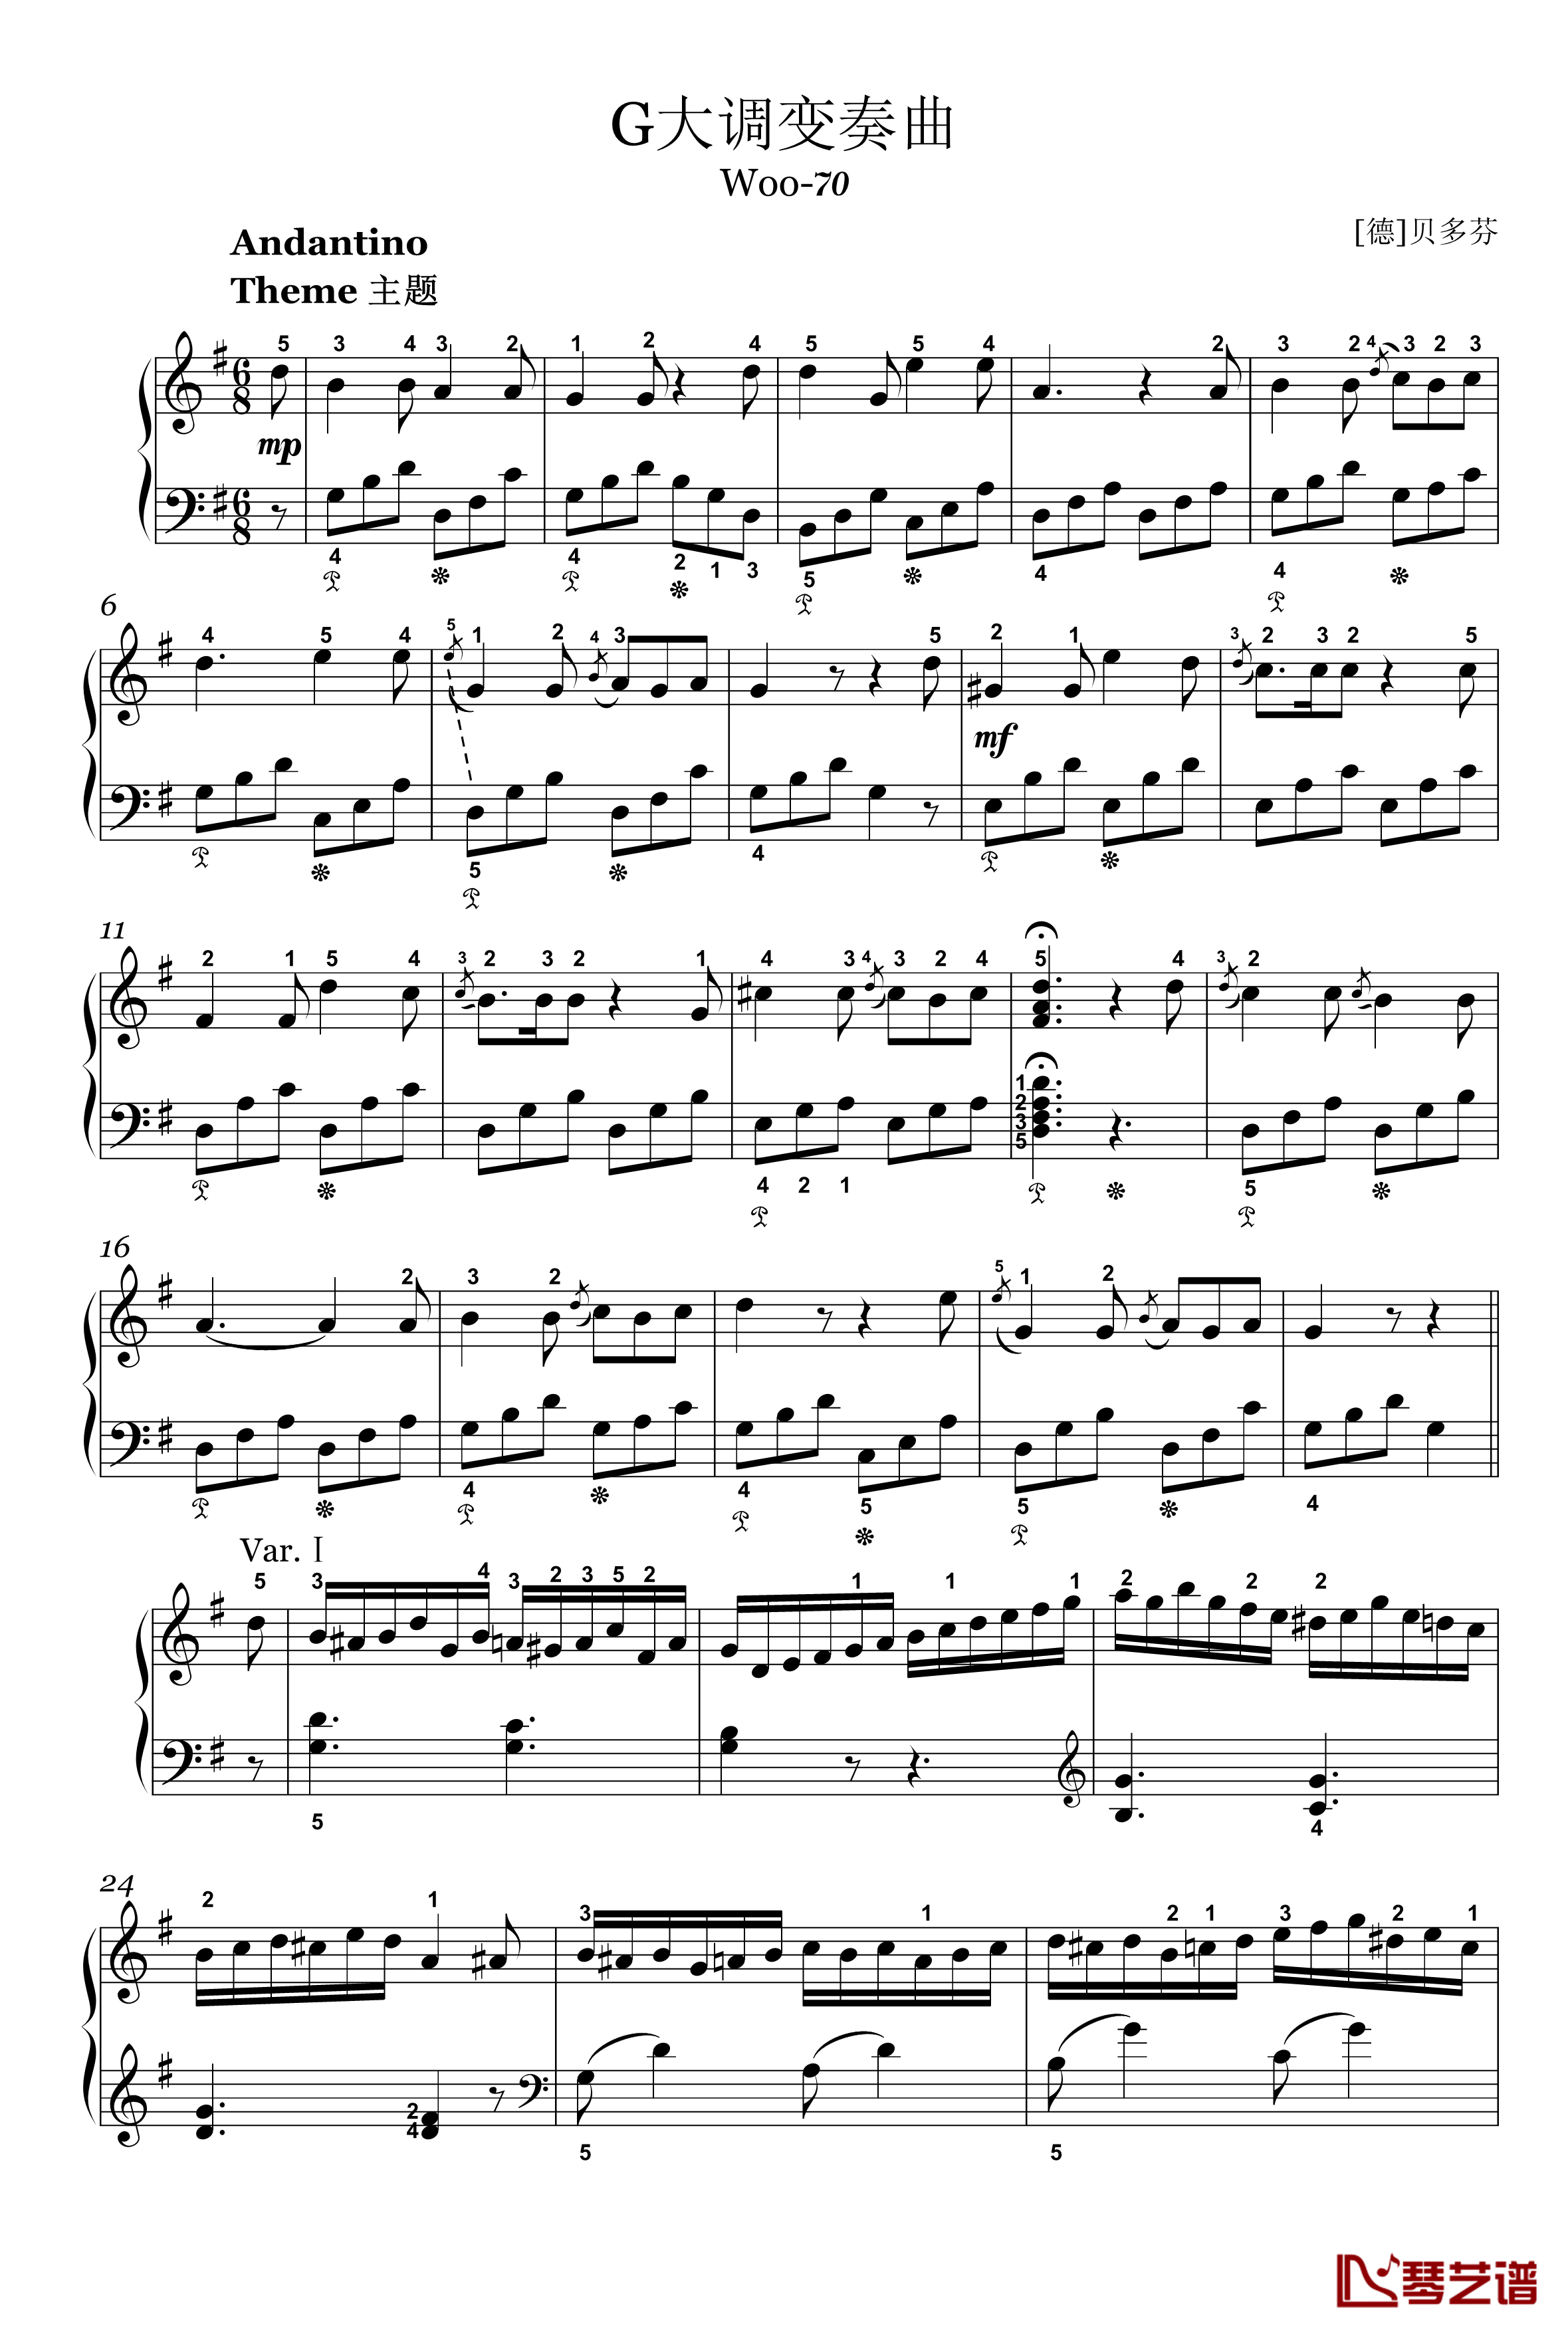 G大调变奏曲钢琴谱-Woo-70-贝多芬-beethoven1